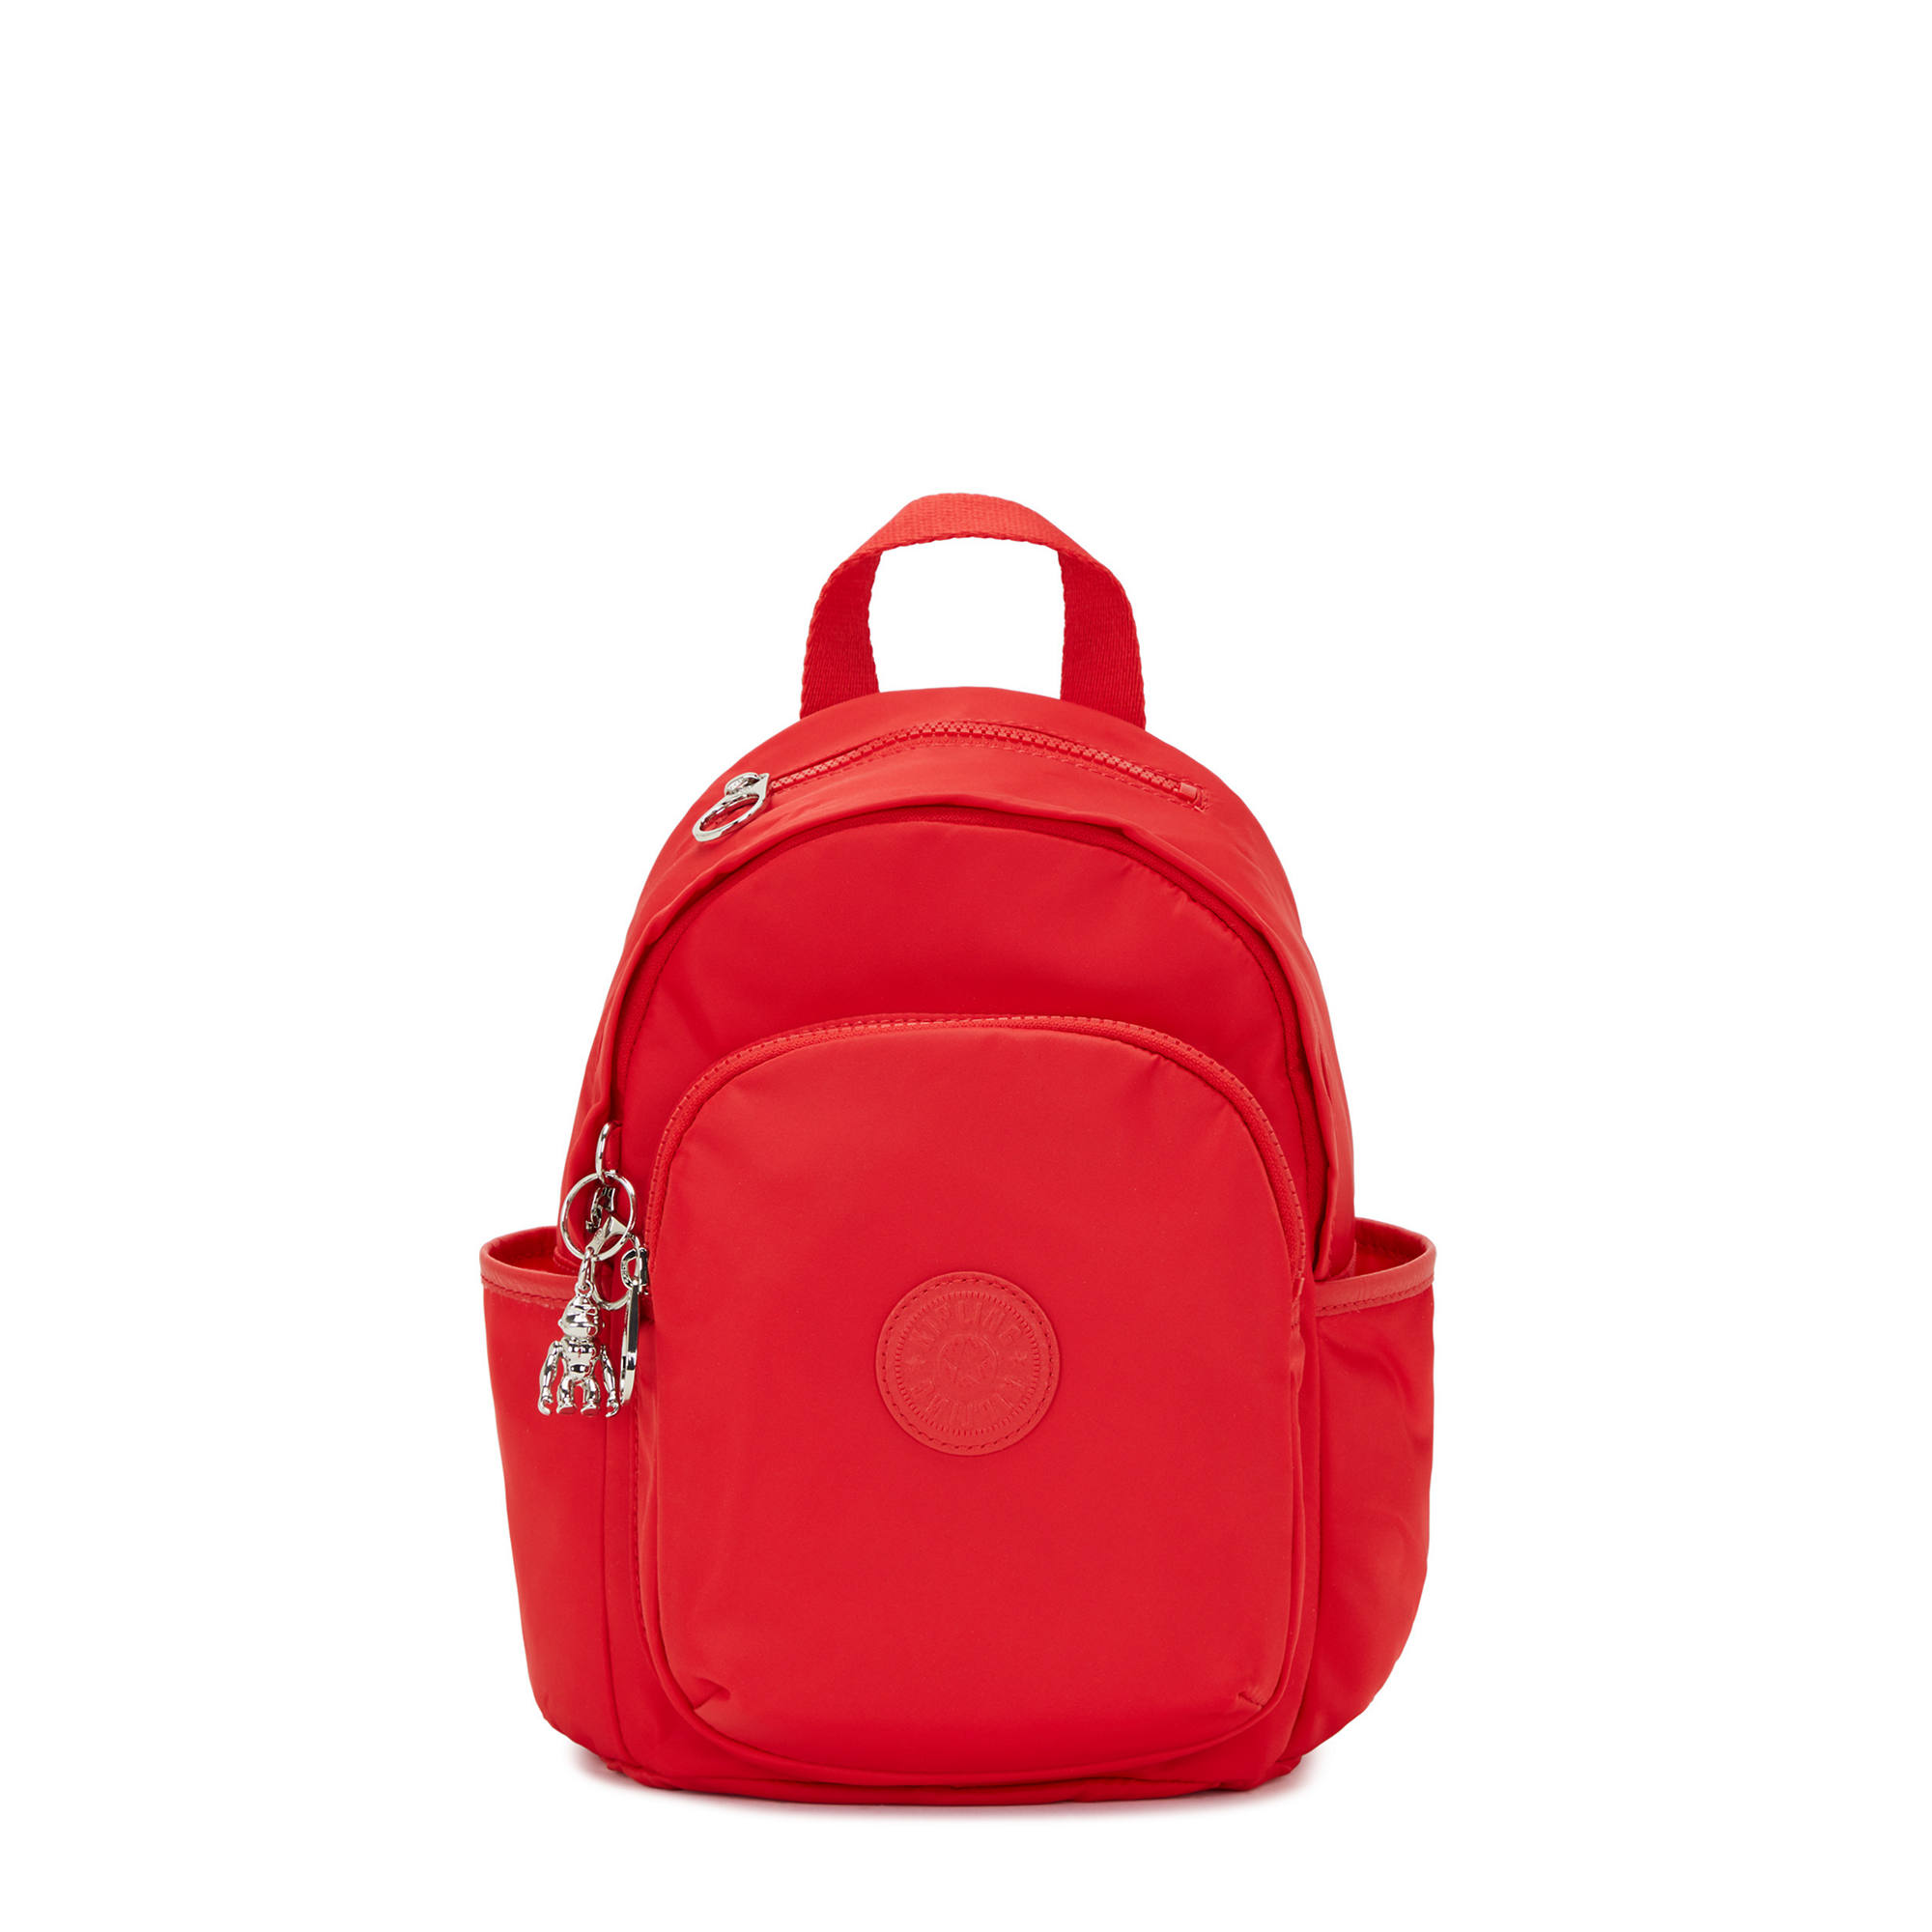 Kipling Delia Mini Backpack Party Red